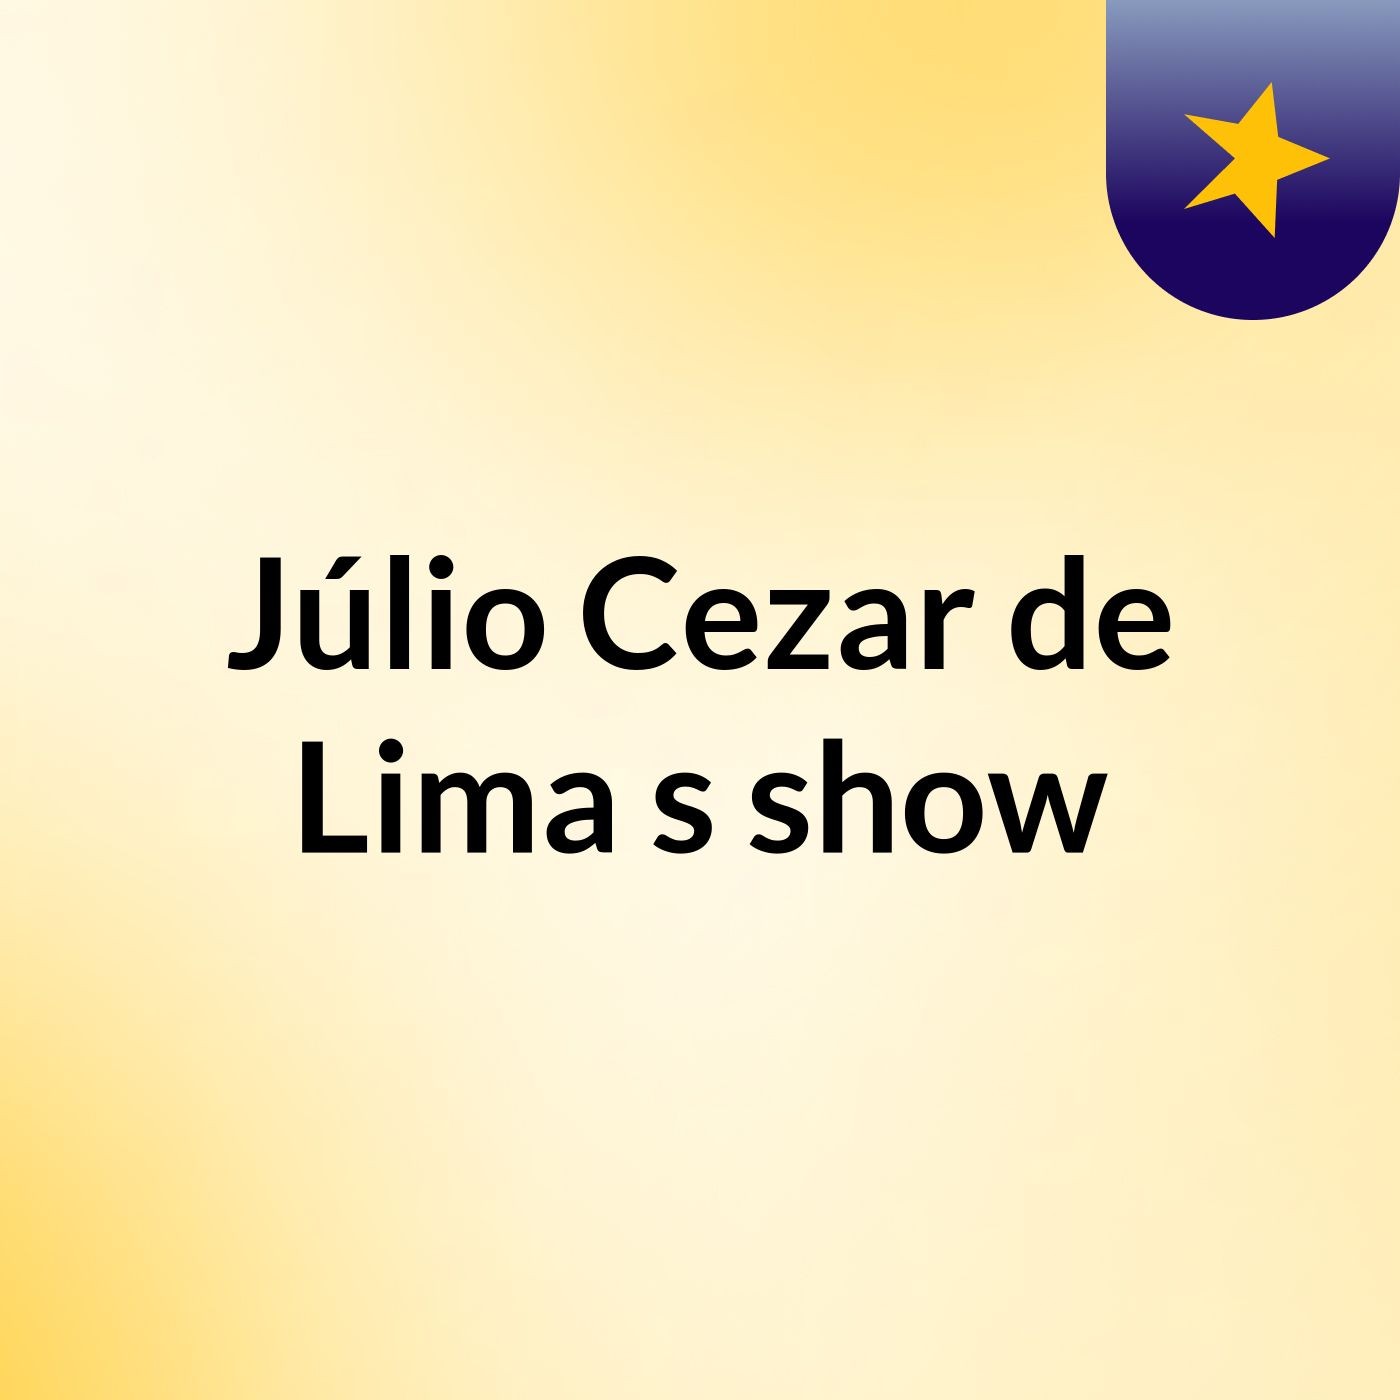 Júlio Cezar de Lima's show